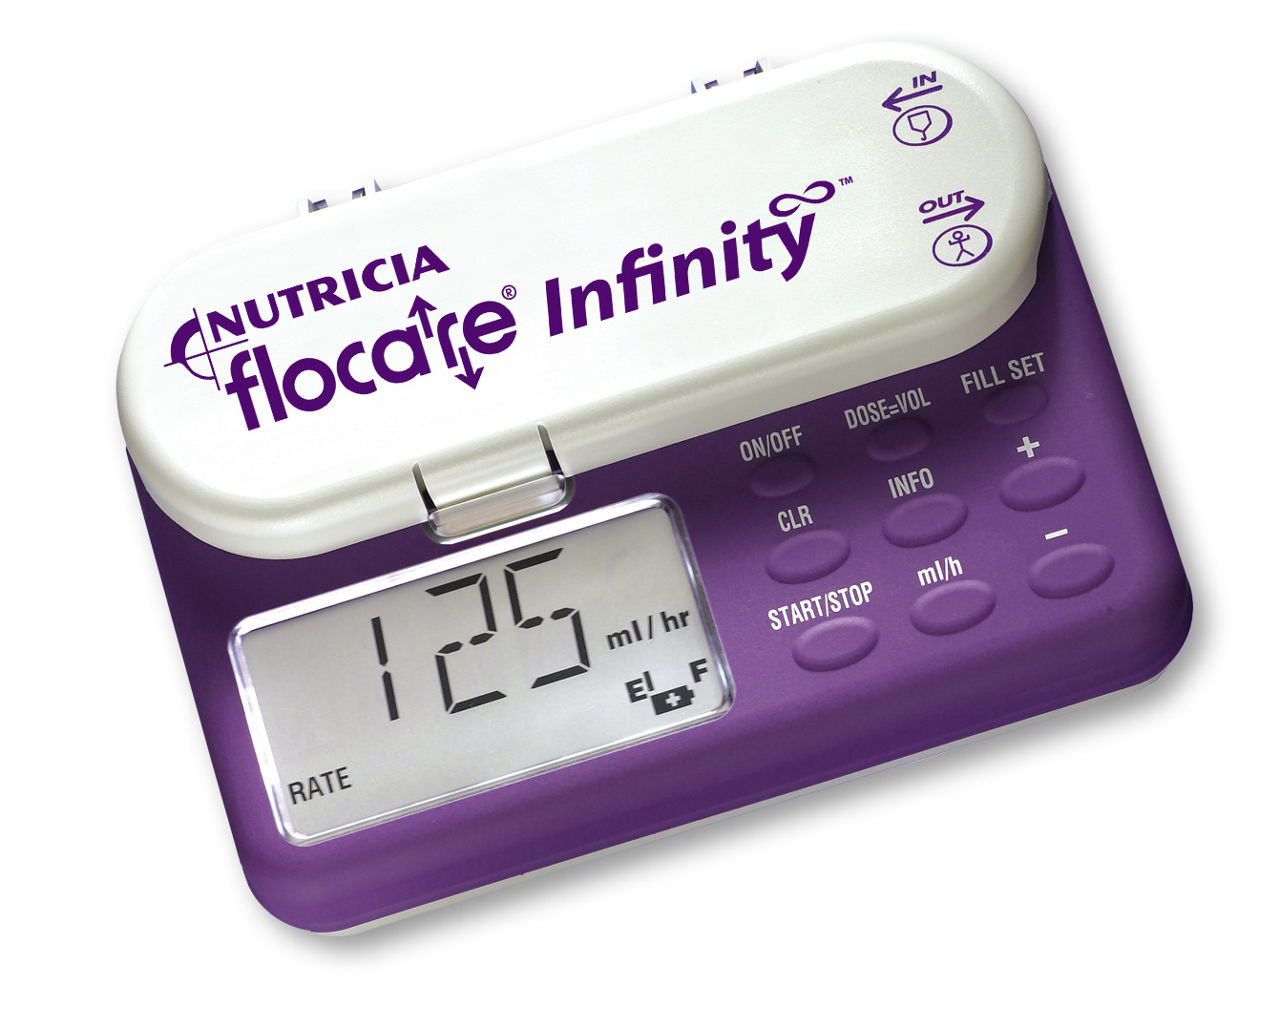 Flocare Infinity pump image